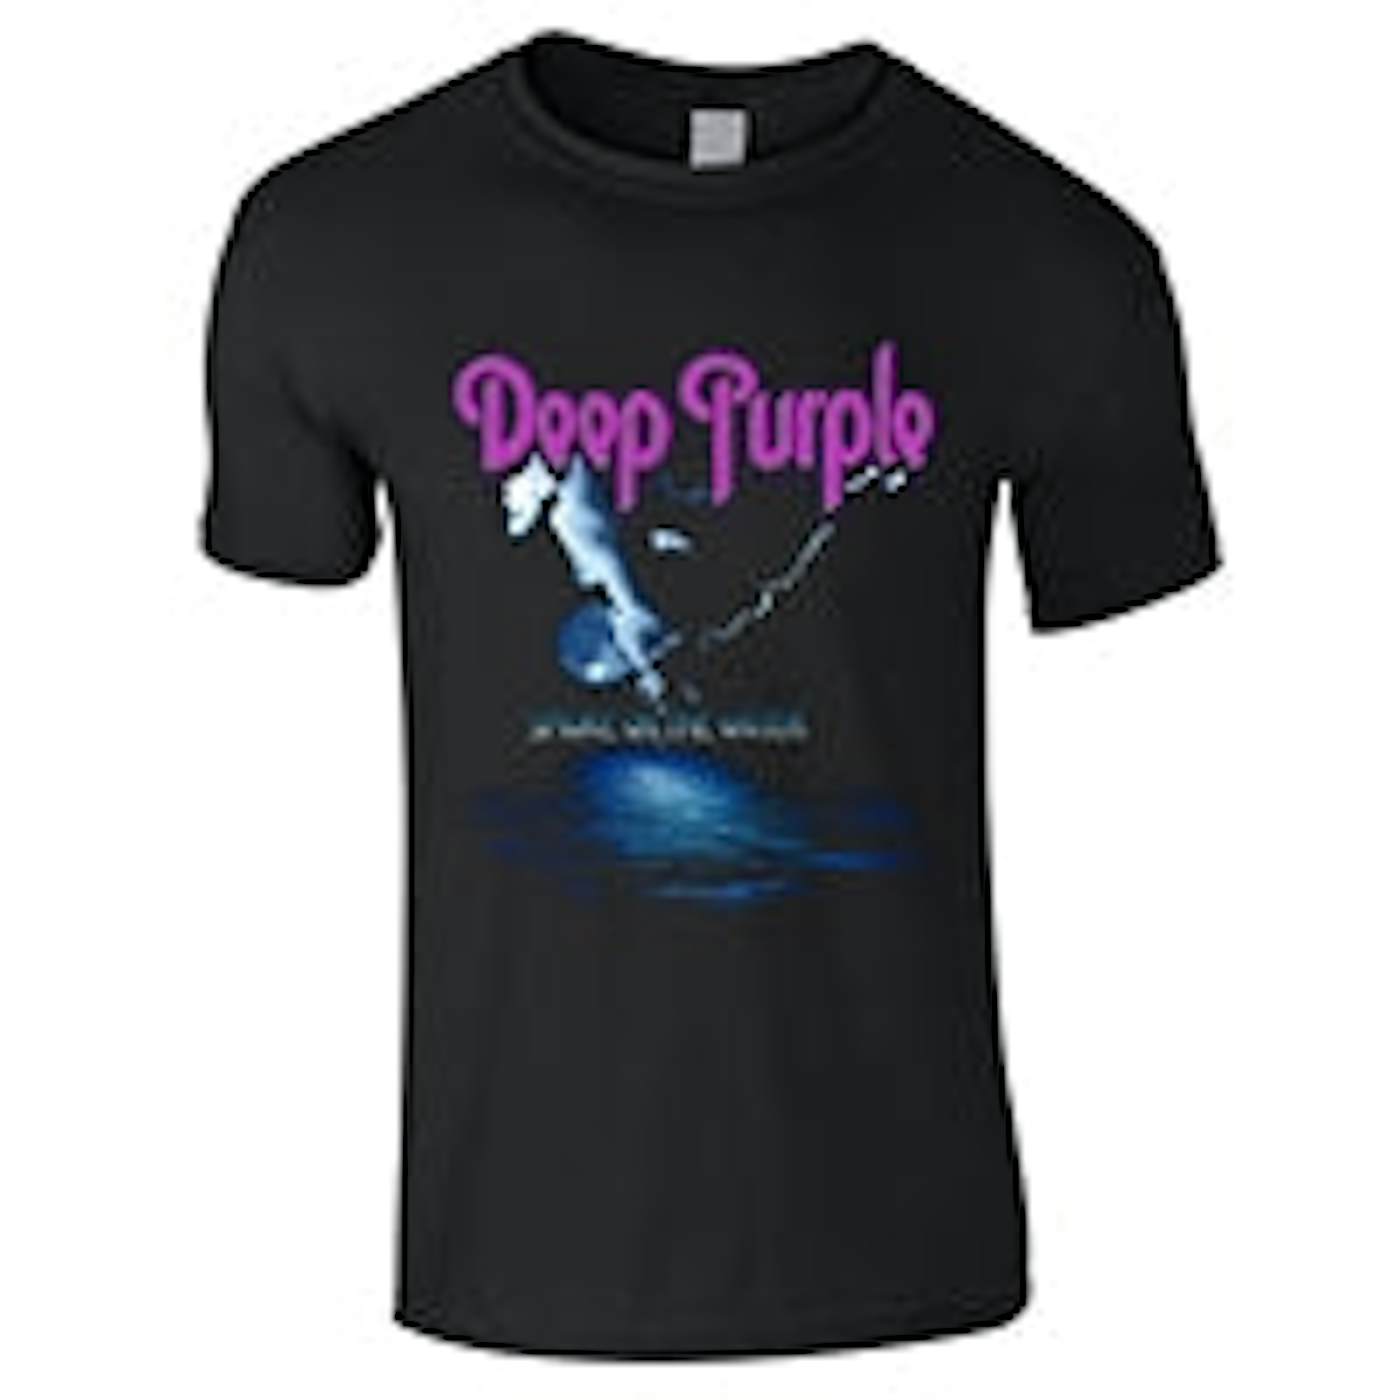 Deep Purple T Shirt - Smoke On The Water